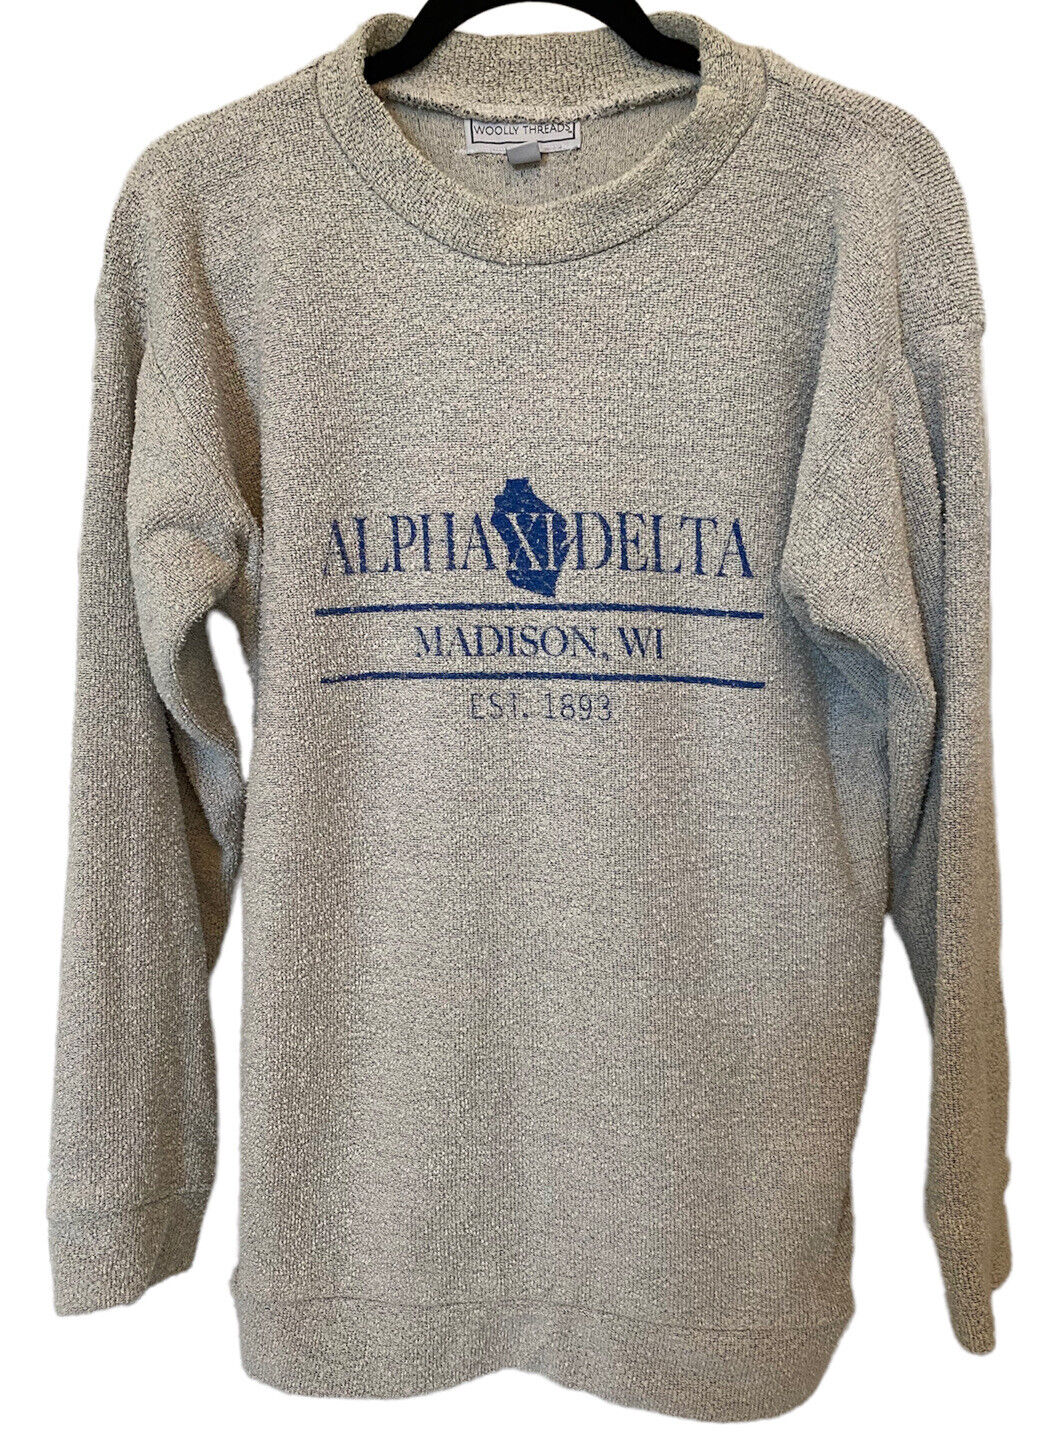 Woolly Threads Sweatshirt Alpha Xi Delta Madison WI Crewneck Sz Large Comfy EUC